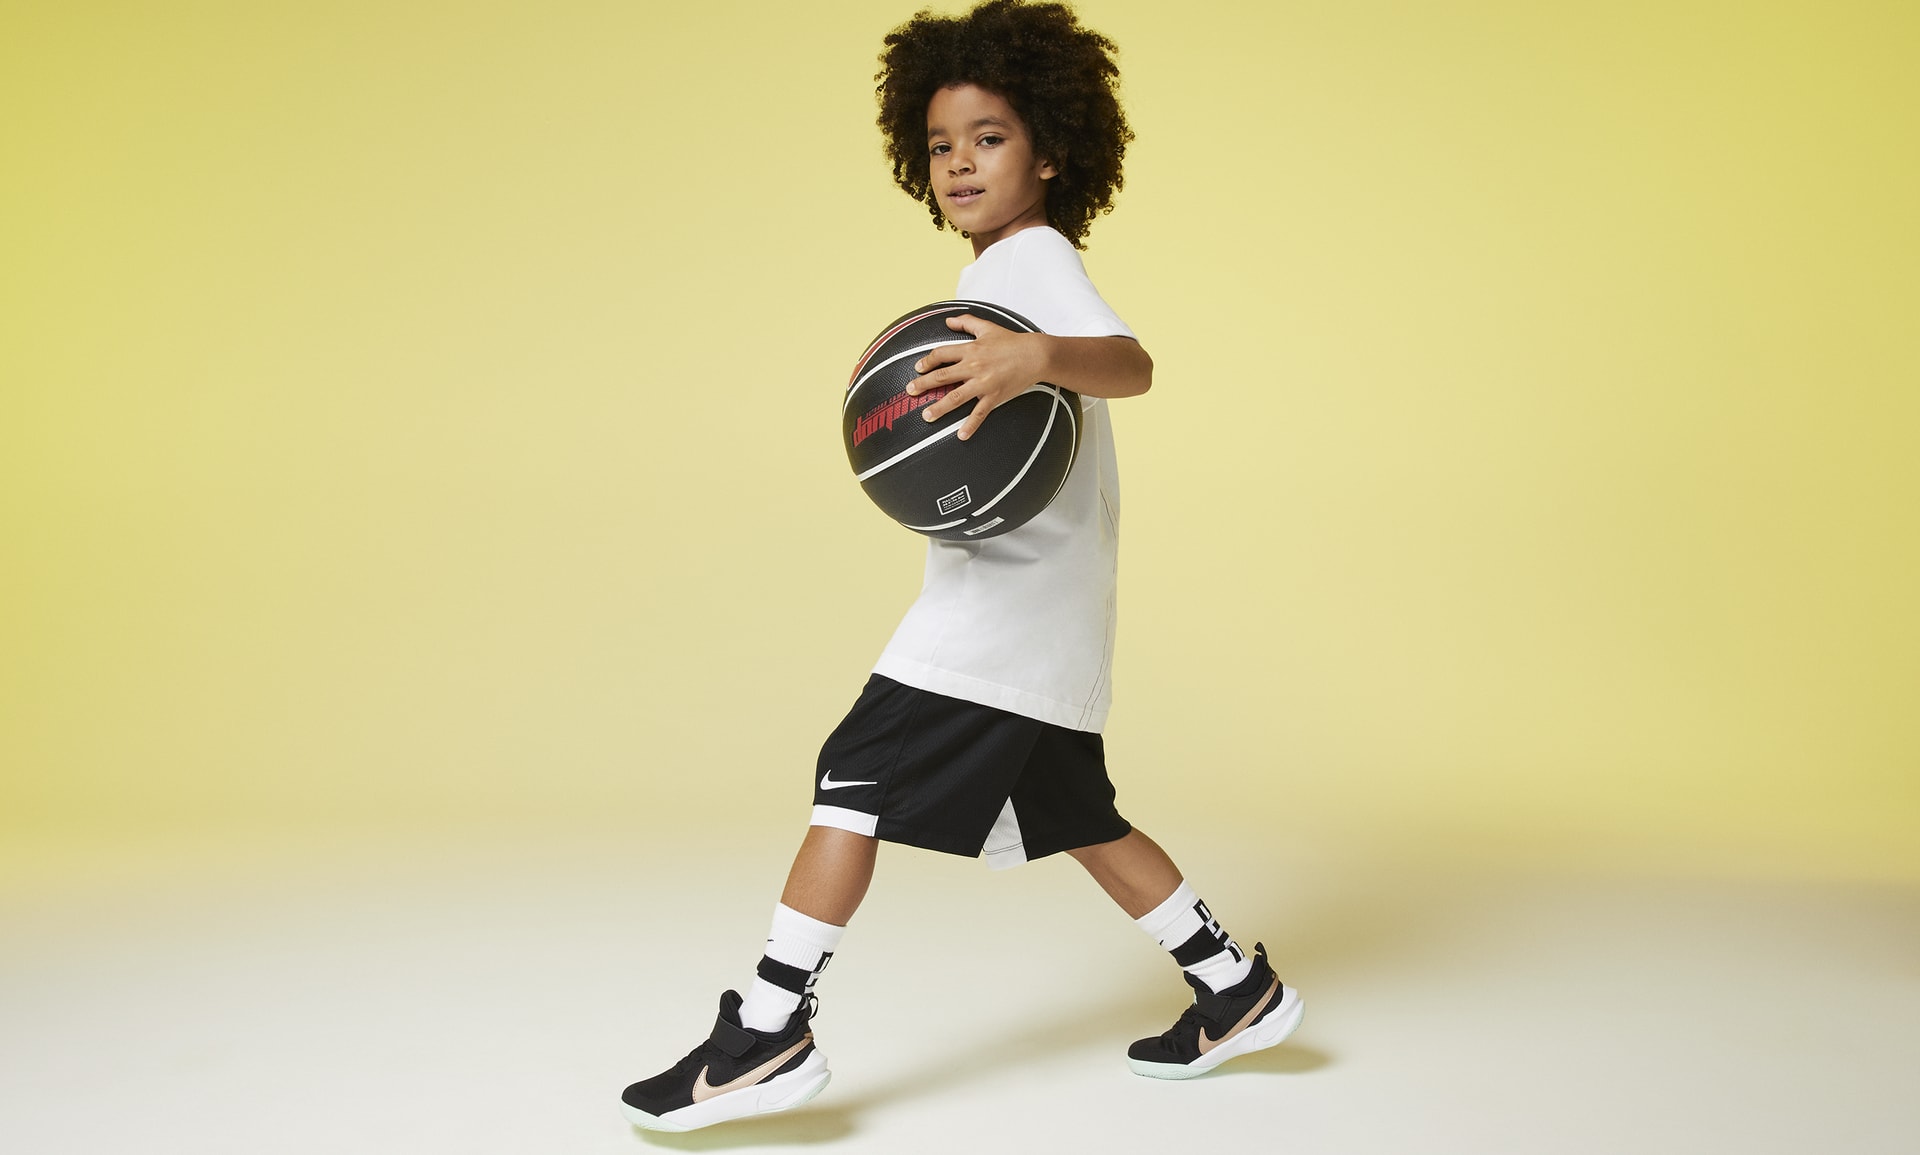 Calzado para niños talla pequeña Nike Team Nike.com